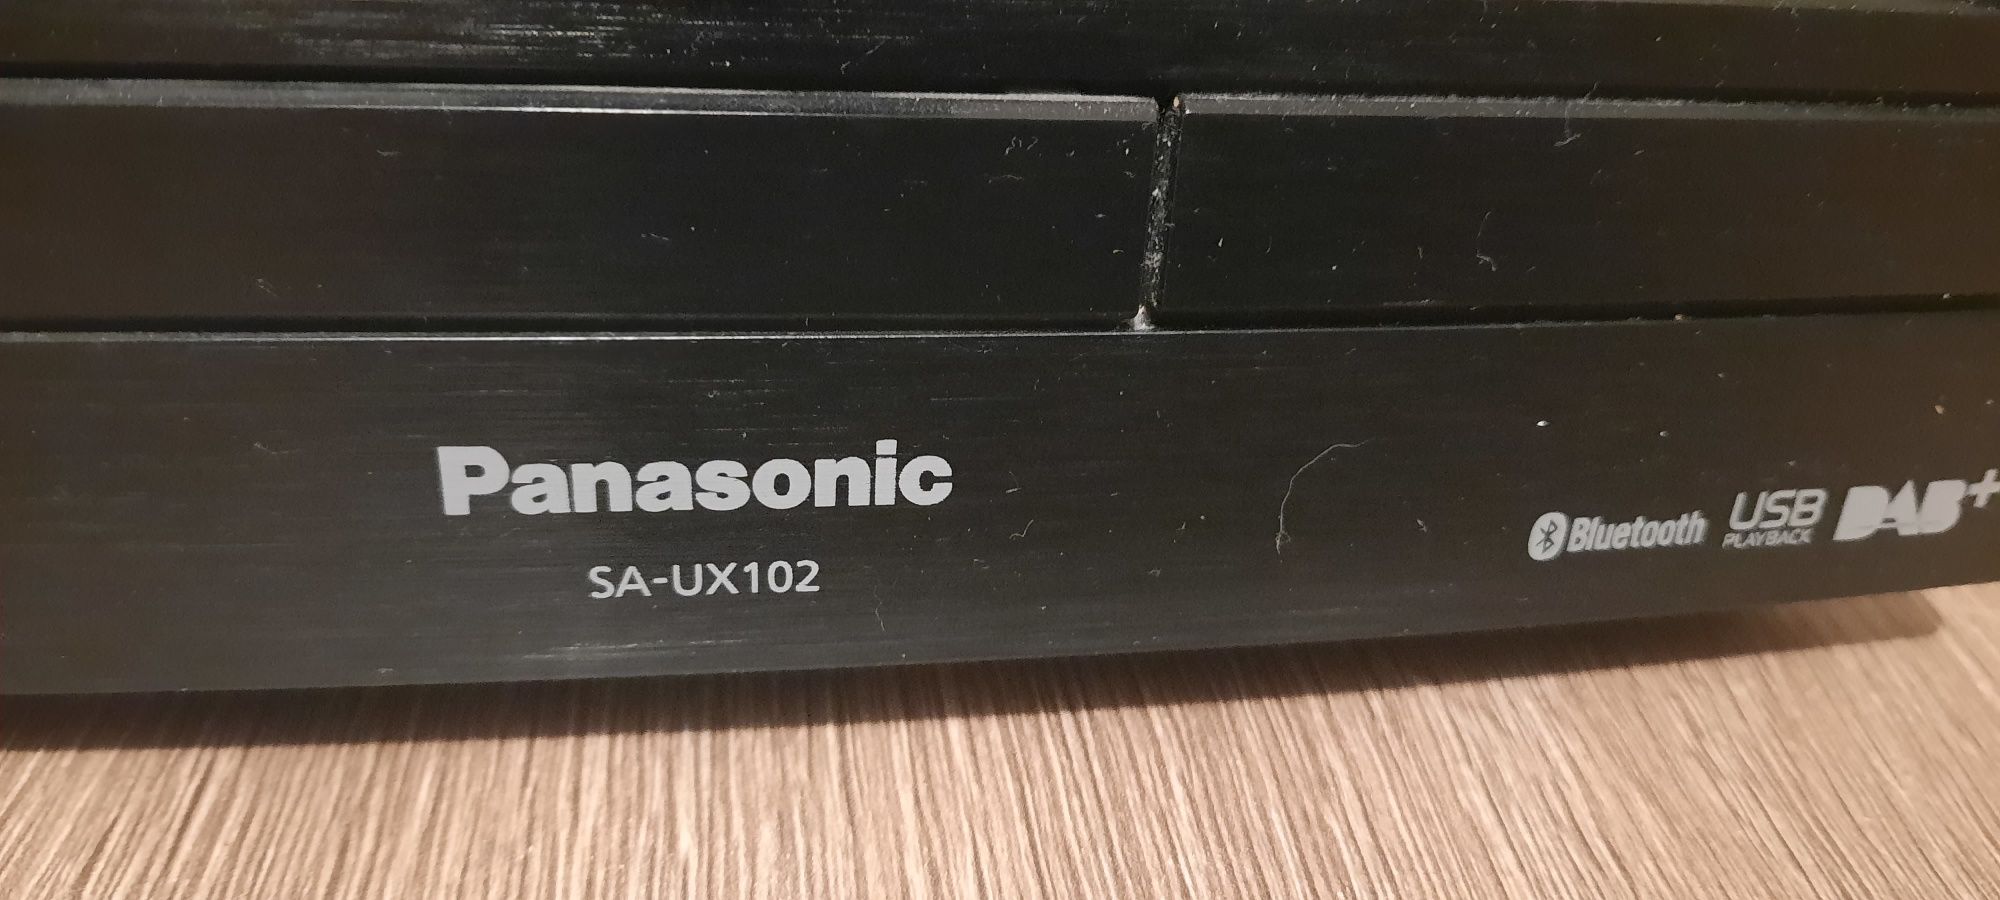 Wieża Panasonic  SA-UX102